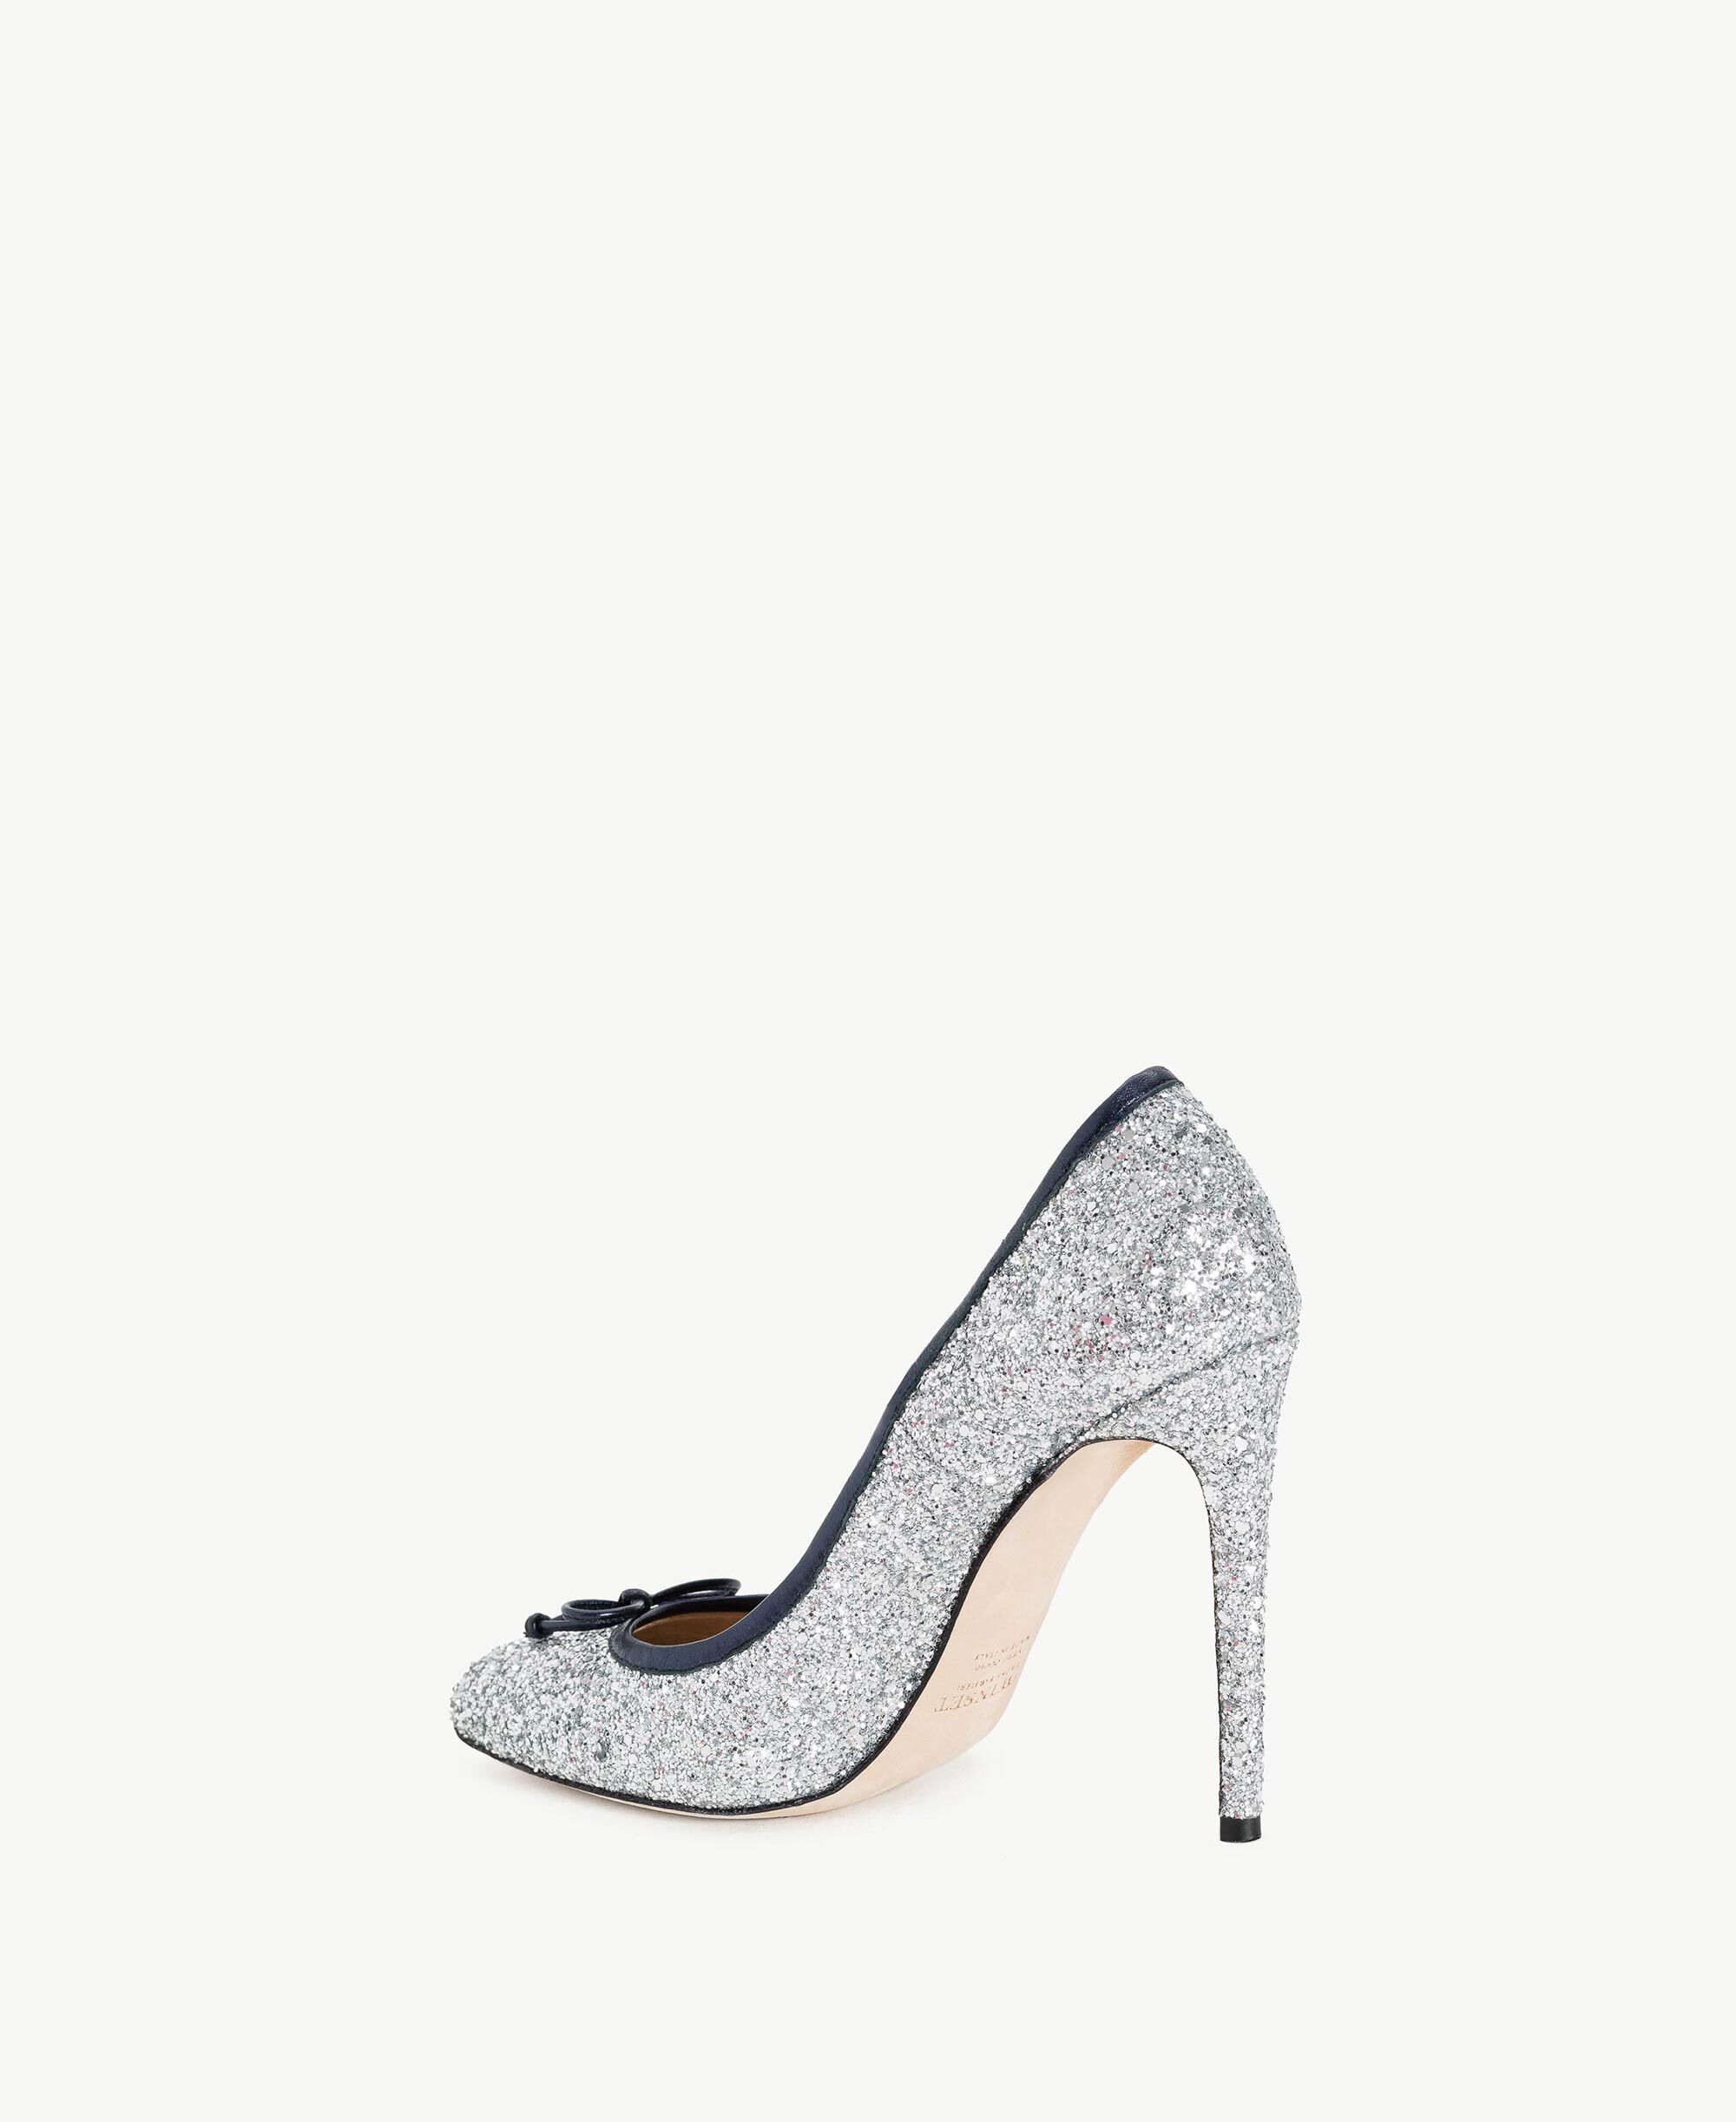 silver glitter court heels